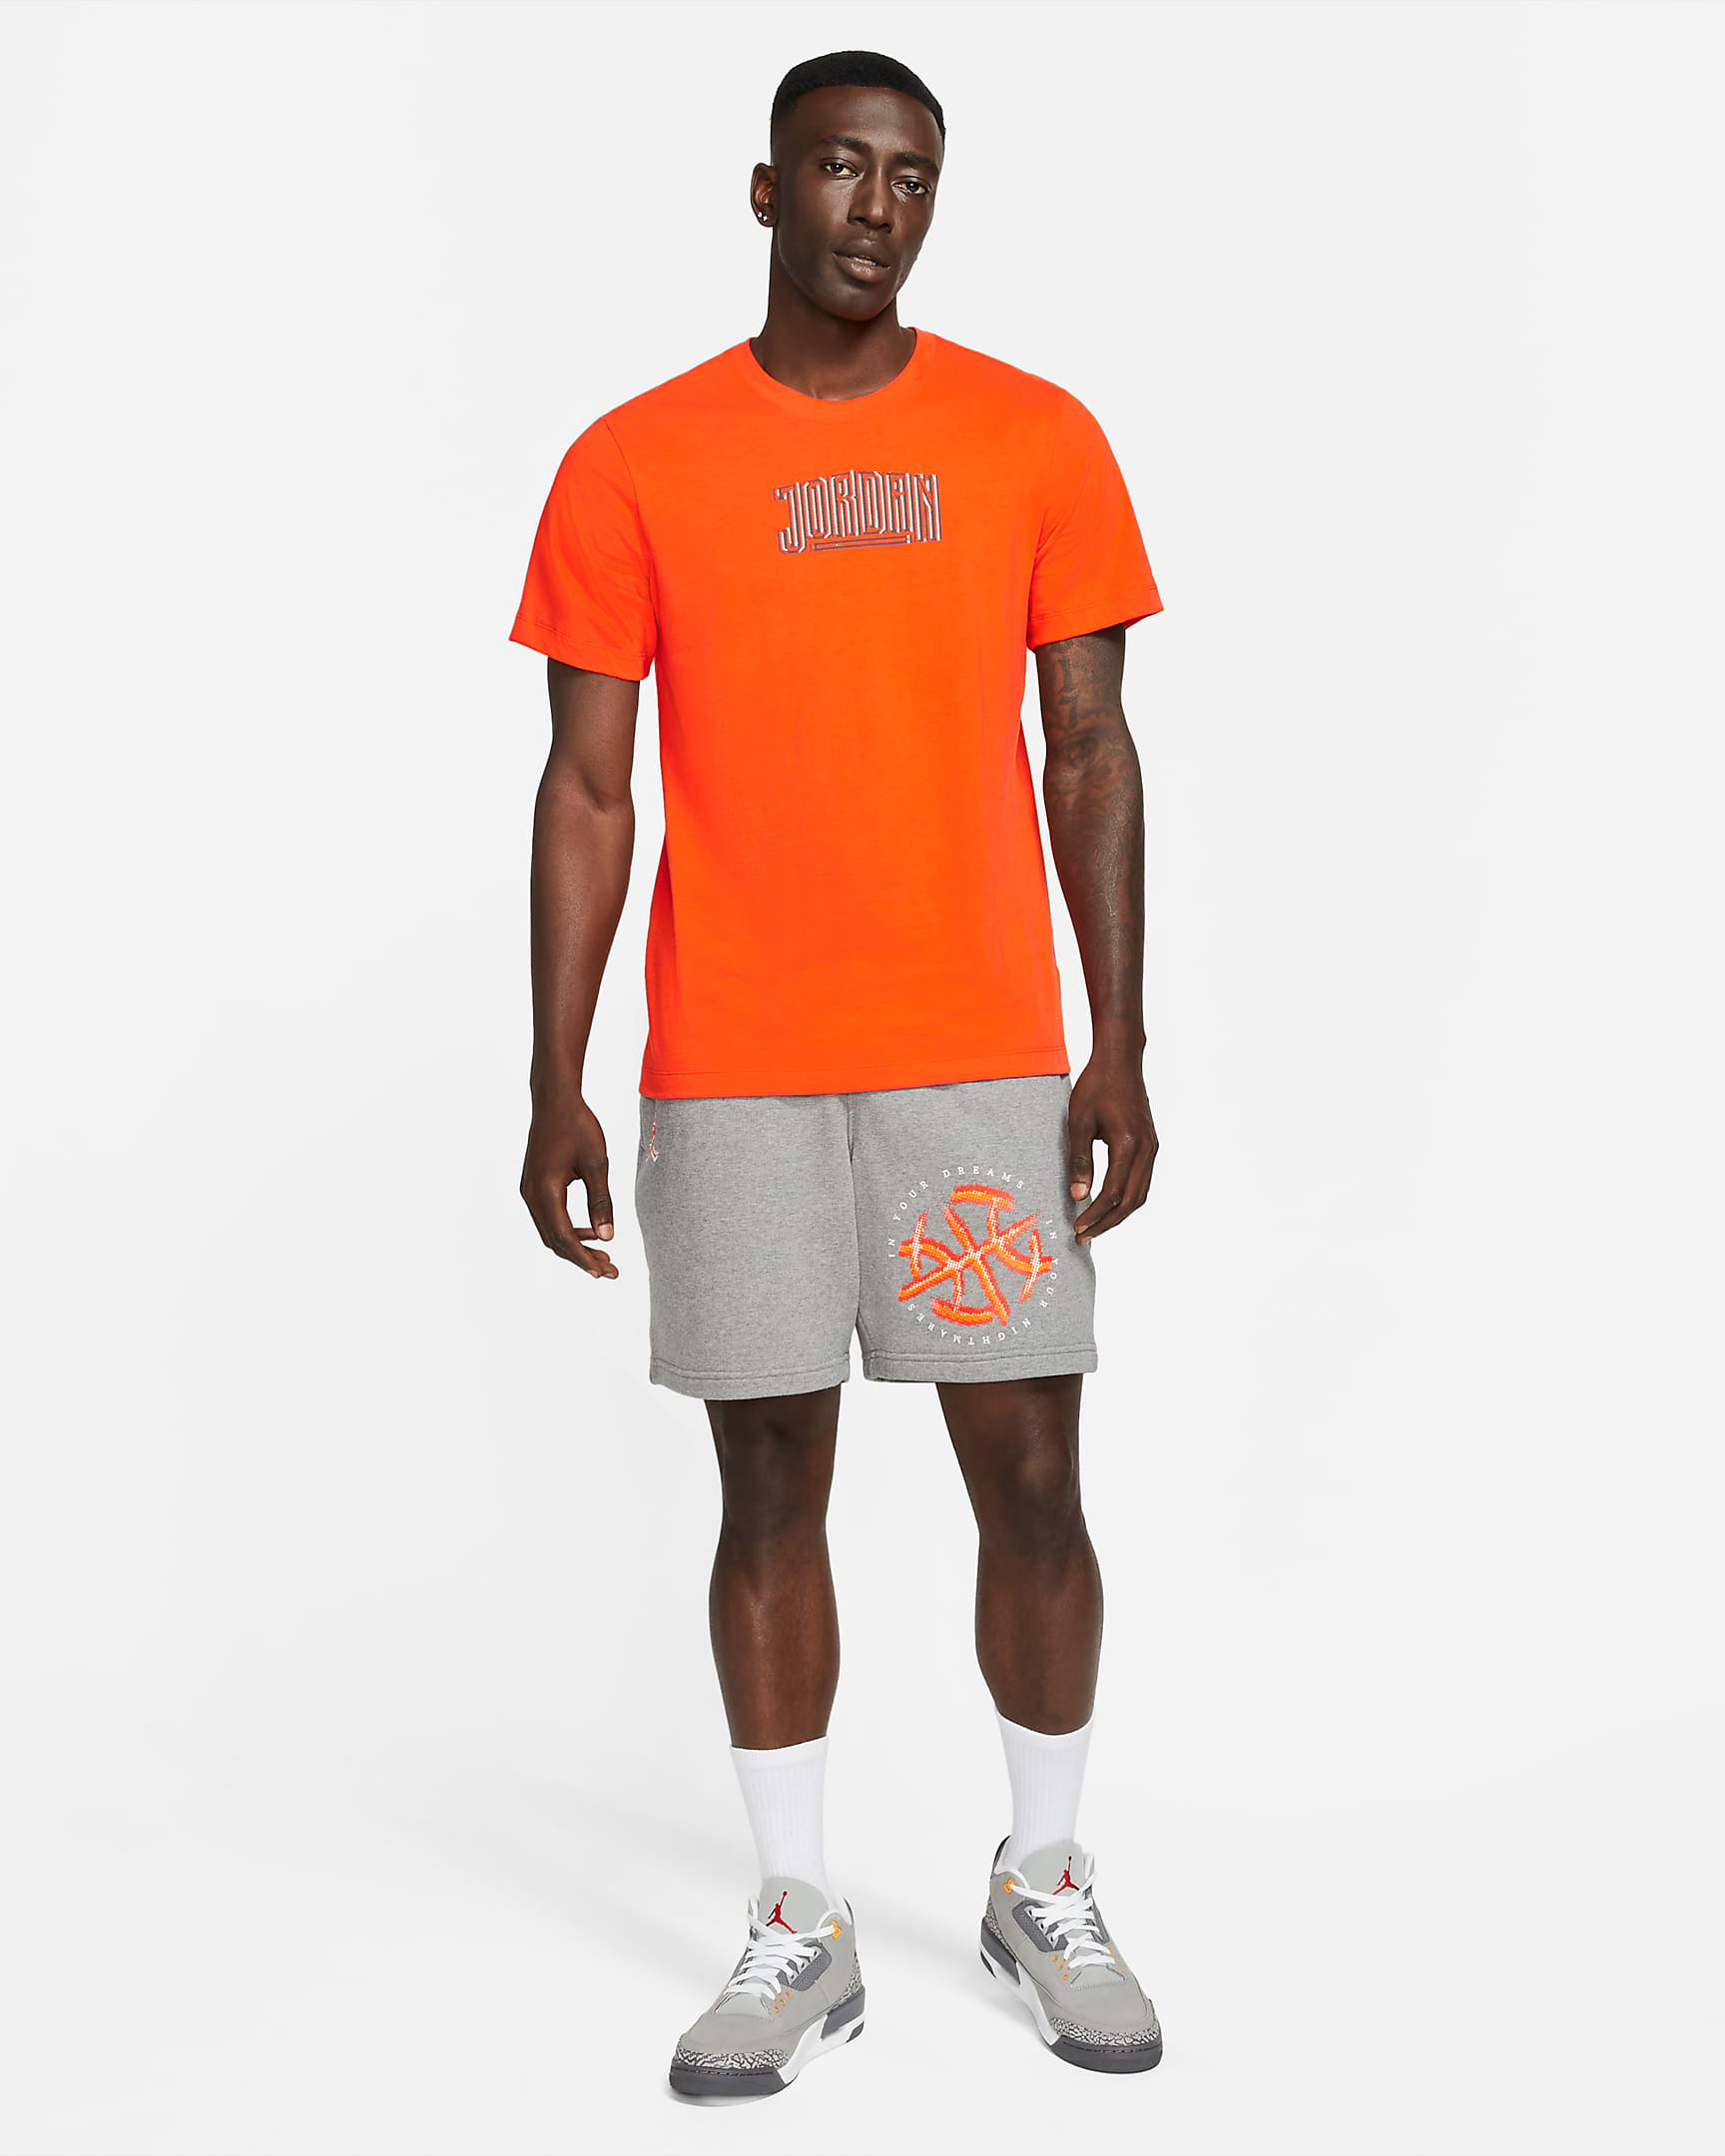 jordan-orange-t-shirt-shorts-sneaker-outfit